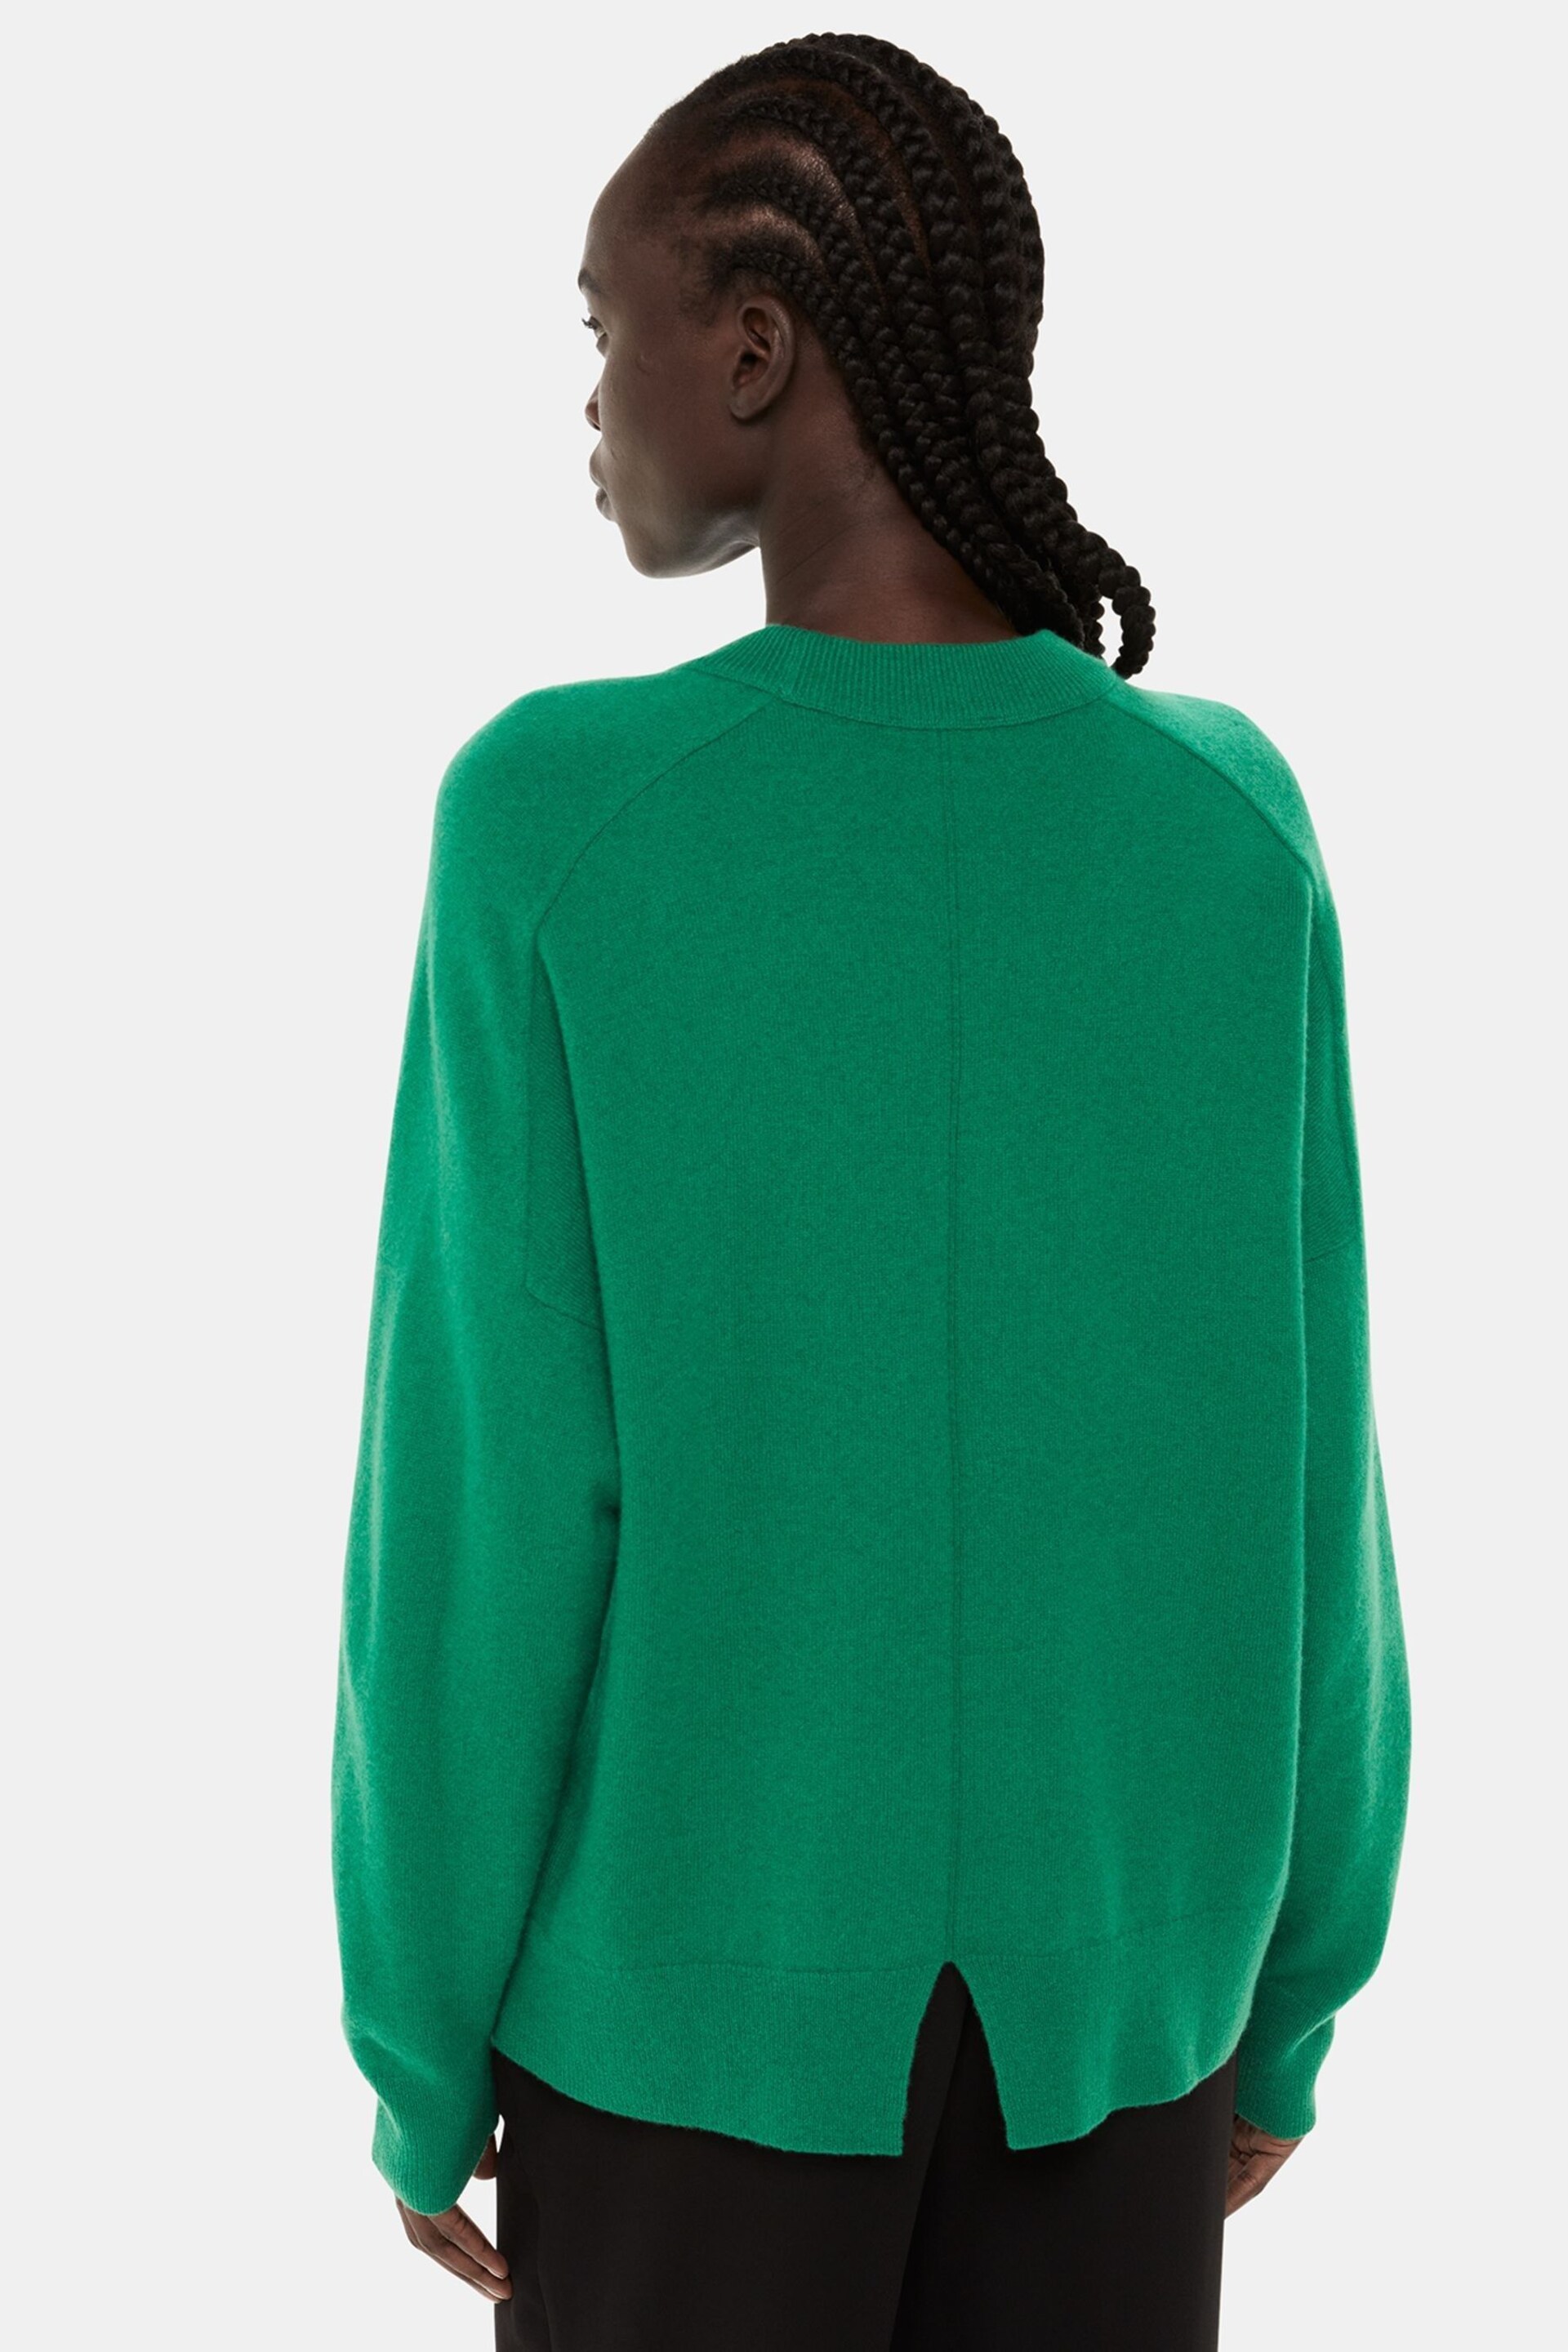 Whistles Green Wool Boyfriend Sweater - Image 2 of 5